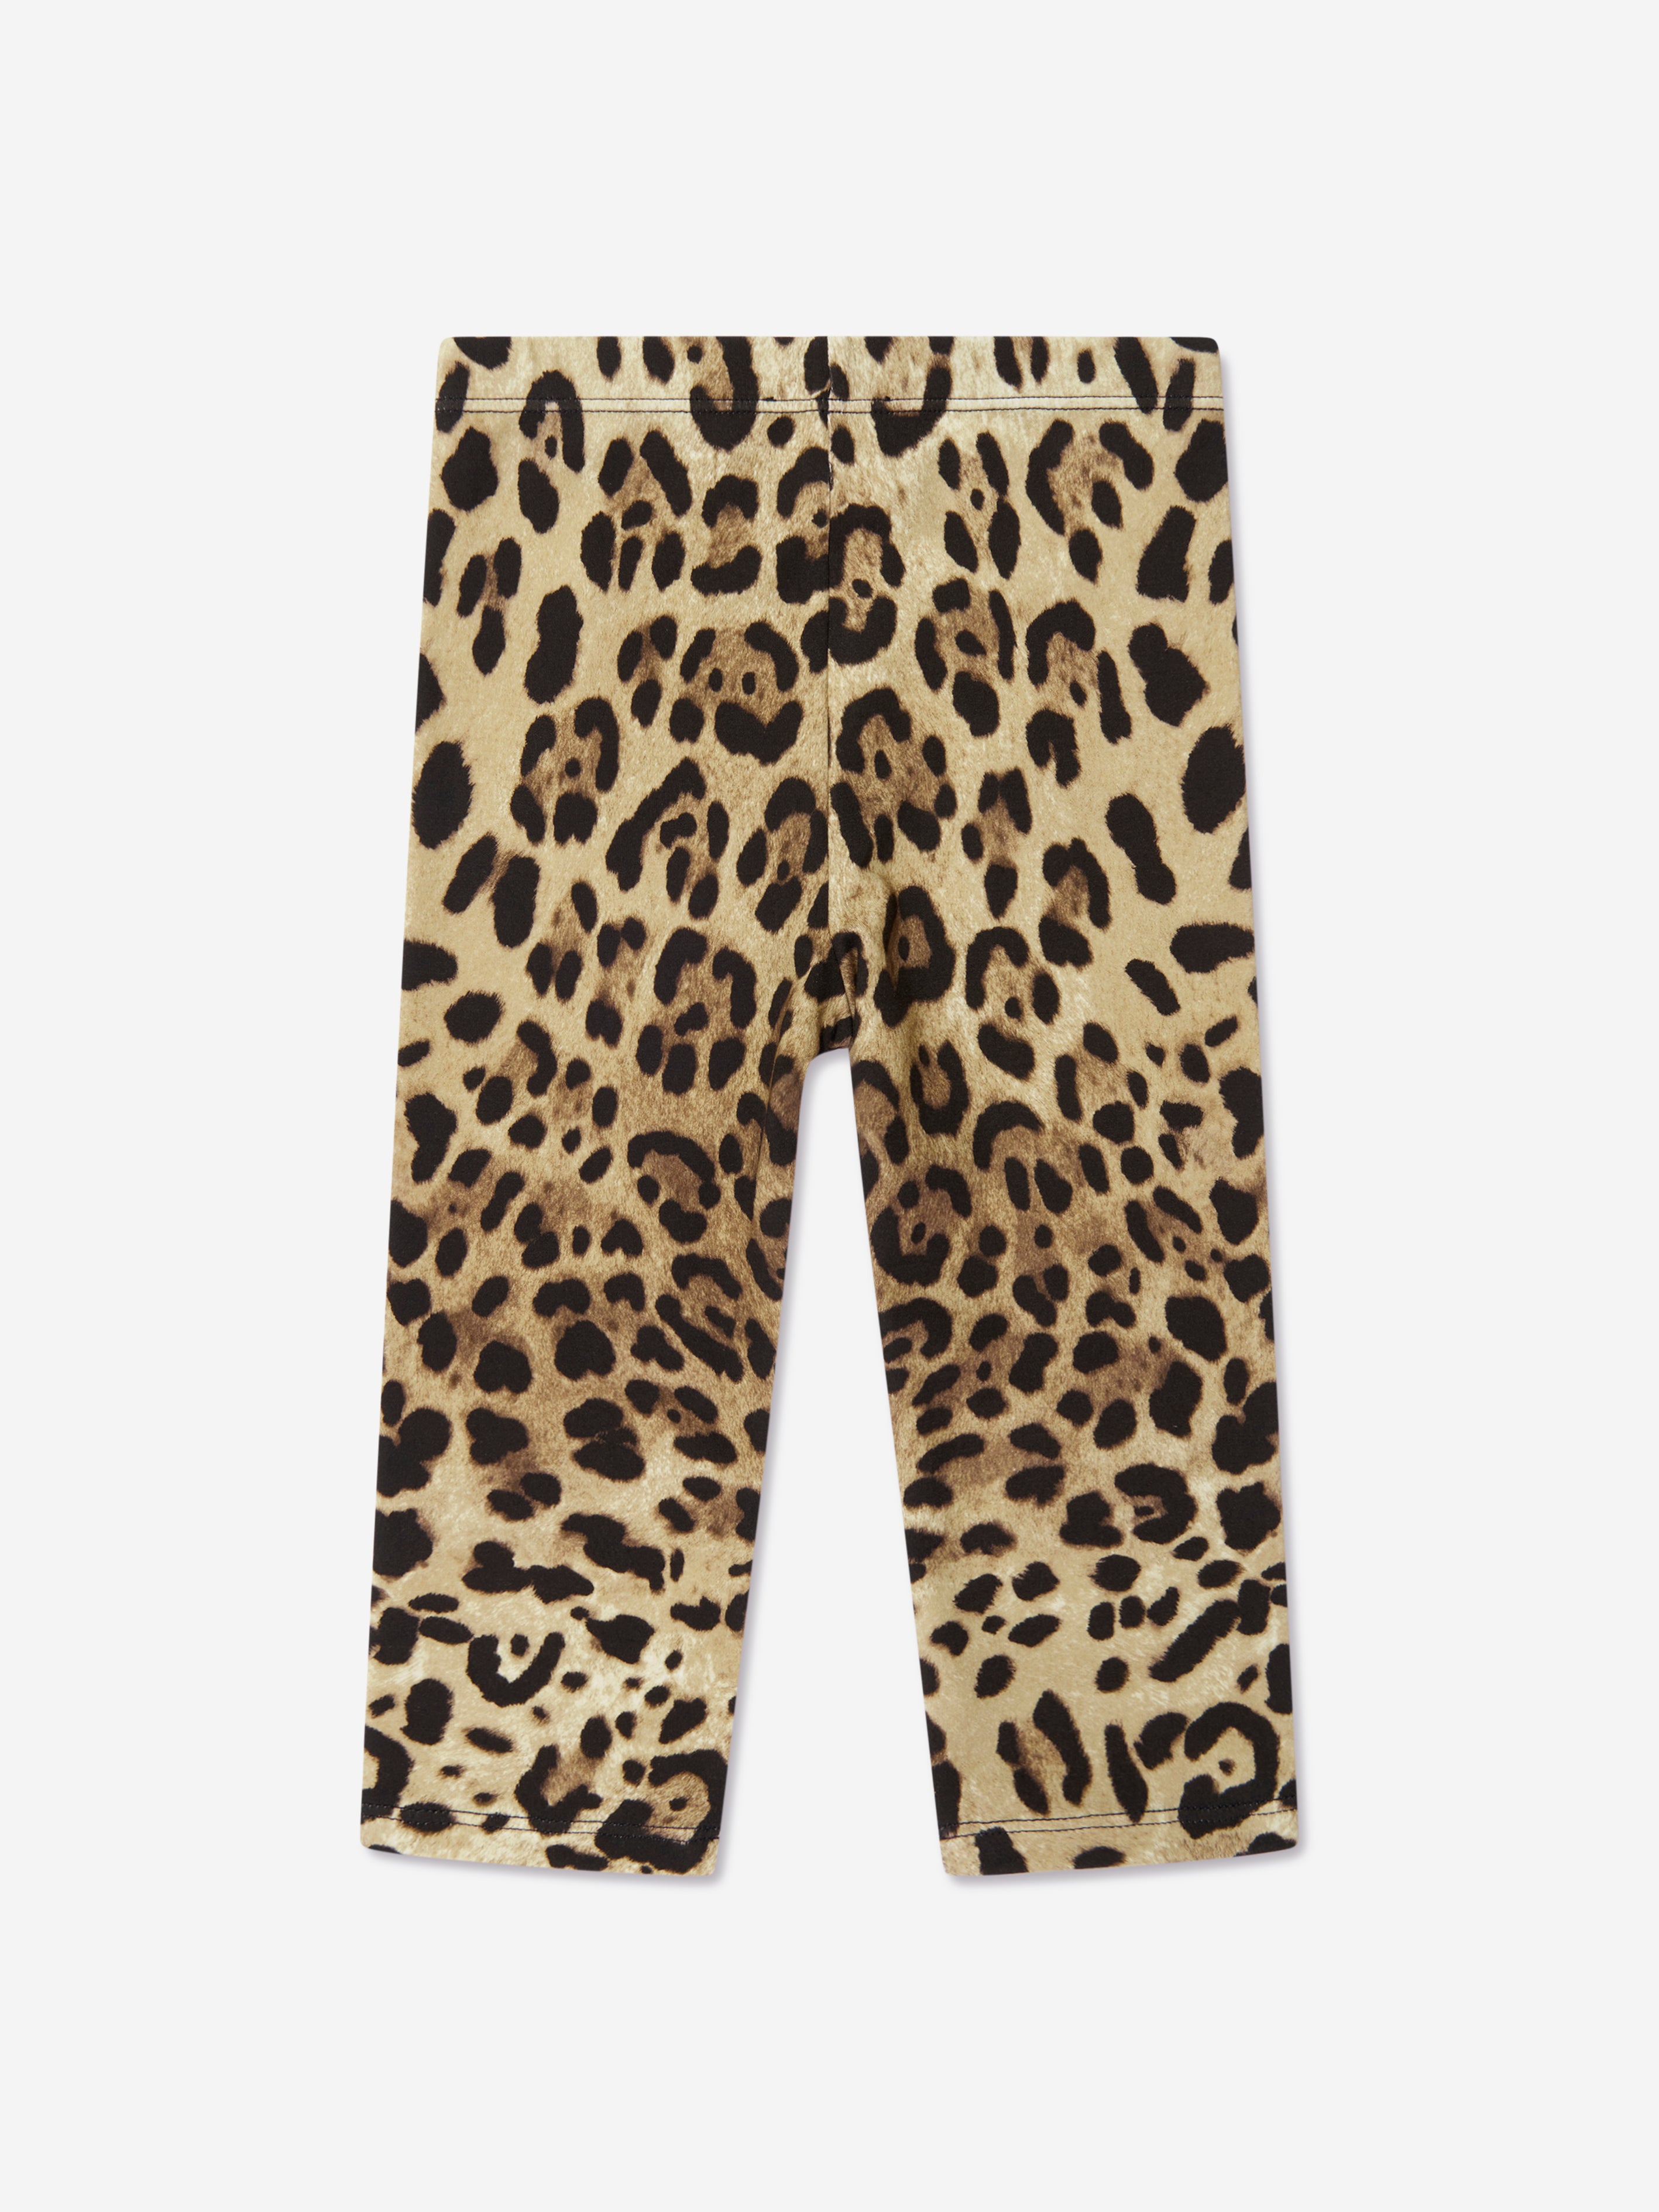 Leopard-print tights in beige - Dolce Gabbana